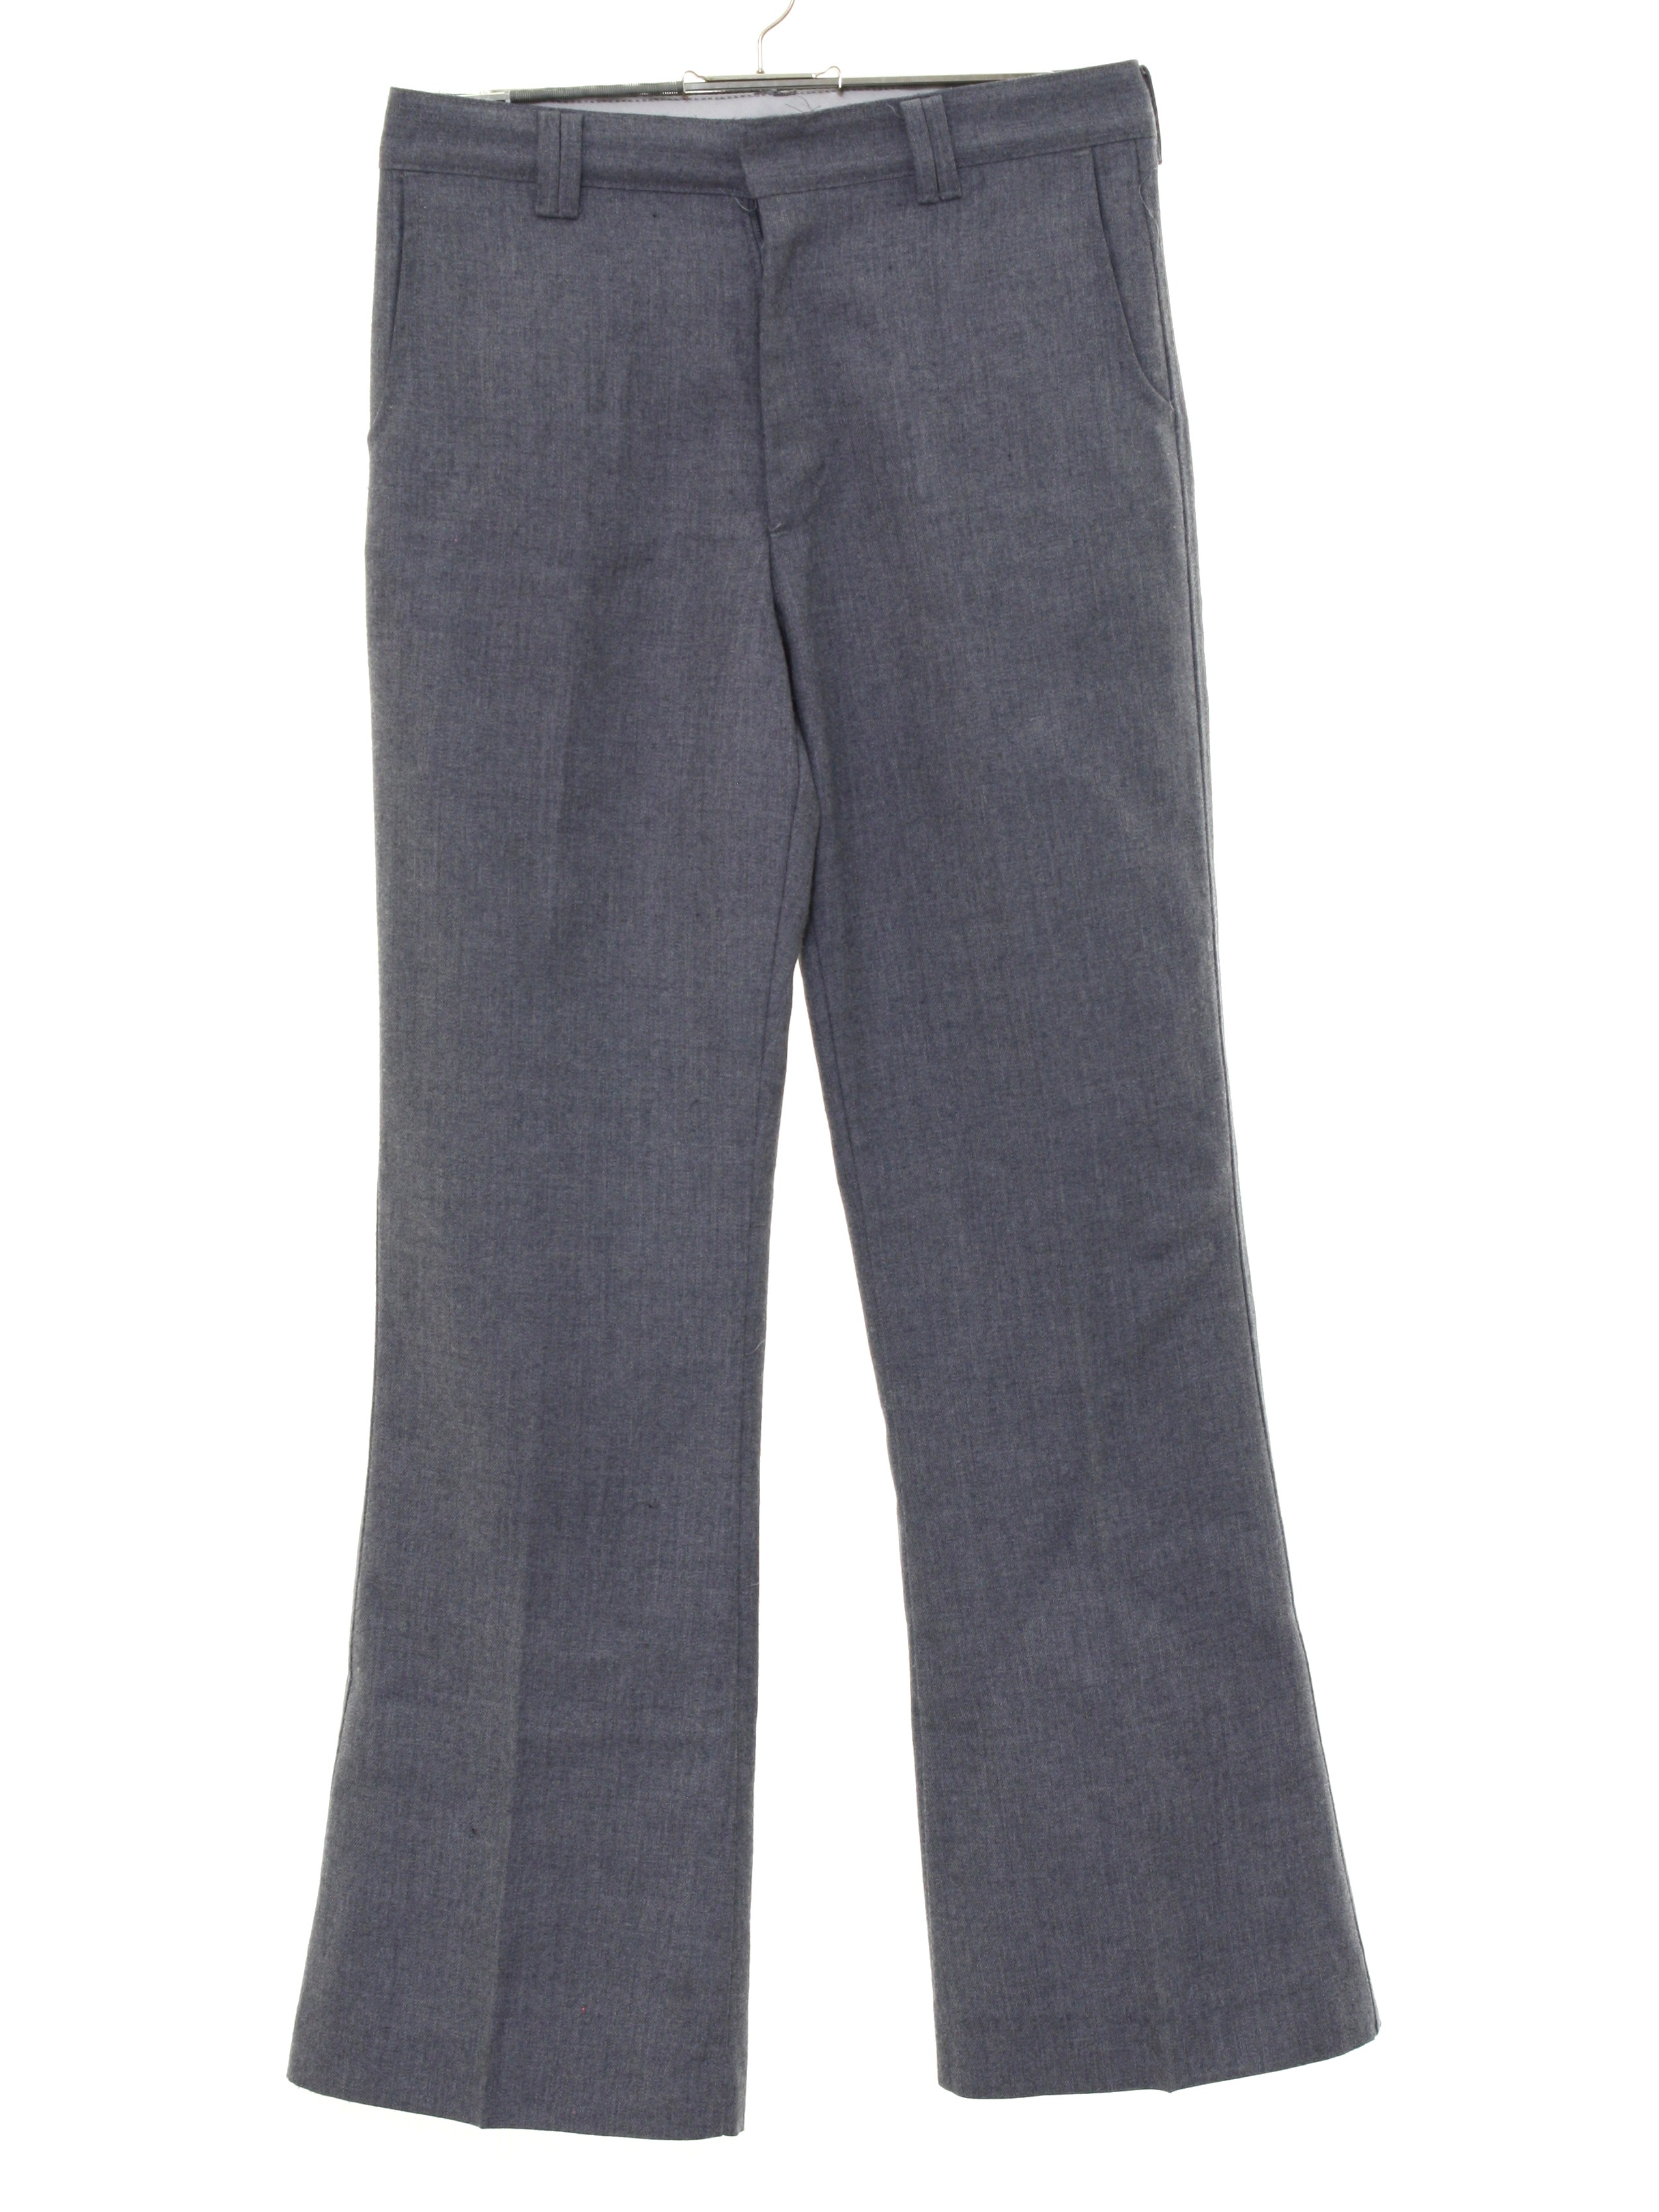 1970's Bellbottom Pants: 70s -No Label- Mens gray heather acrylic ...